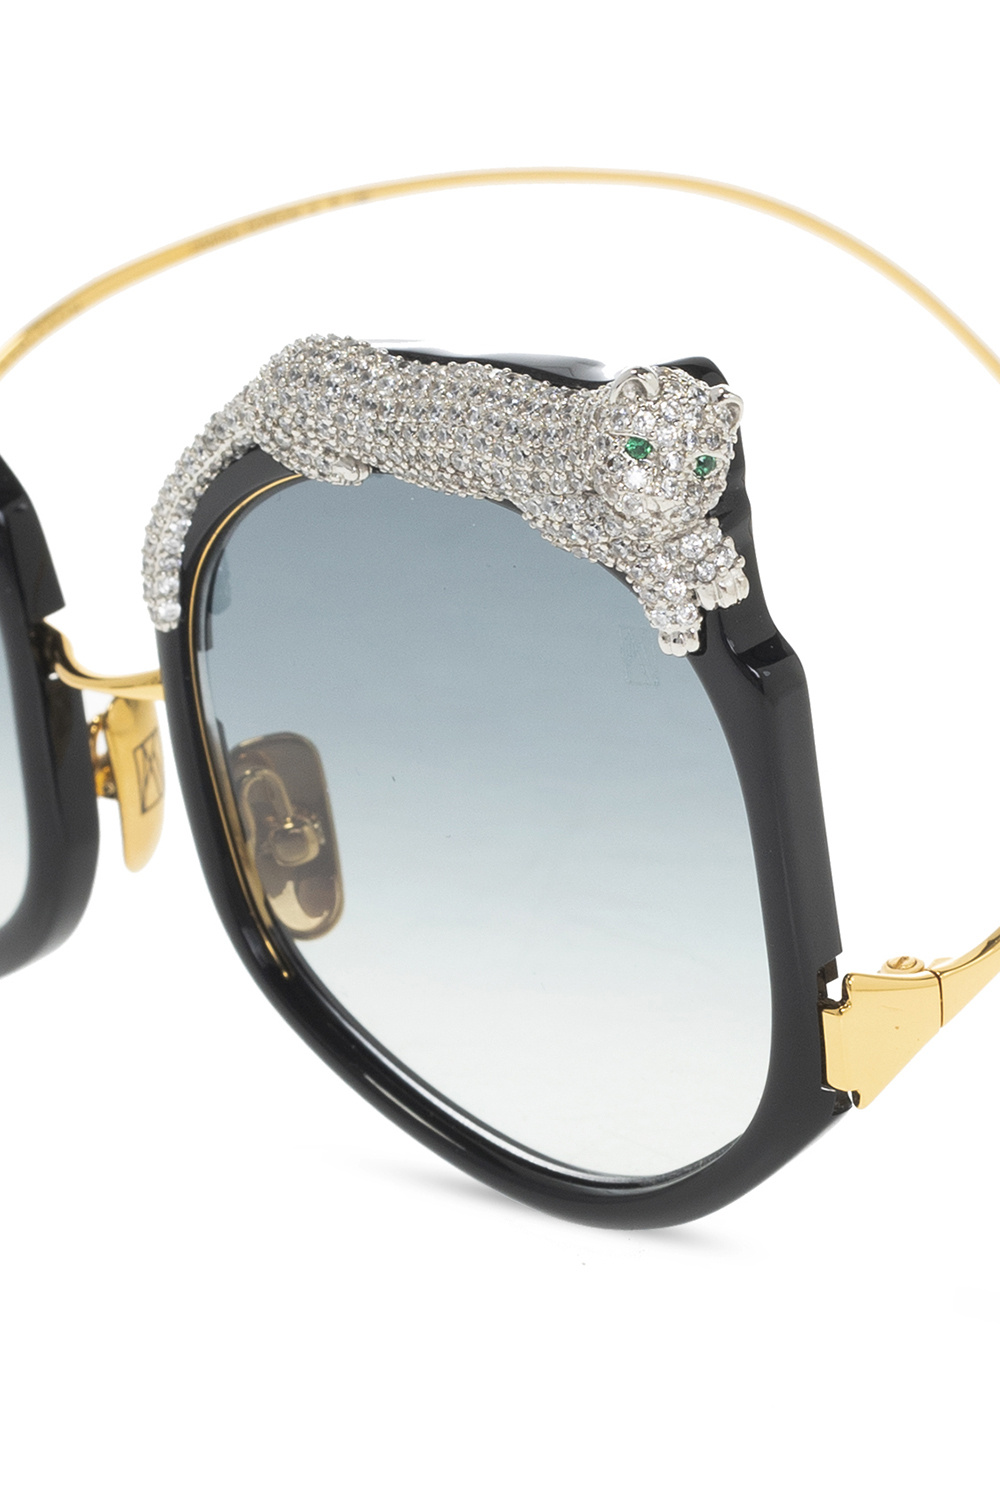 Olympian oval frame sunglasses ‘Rose Et Le Reve’ sunglasses